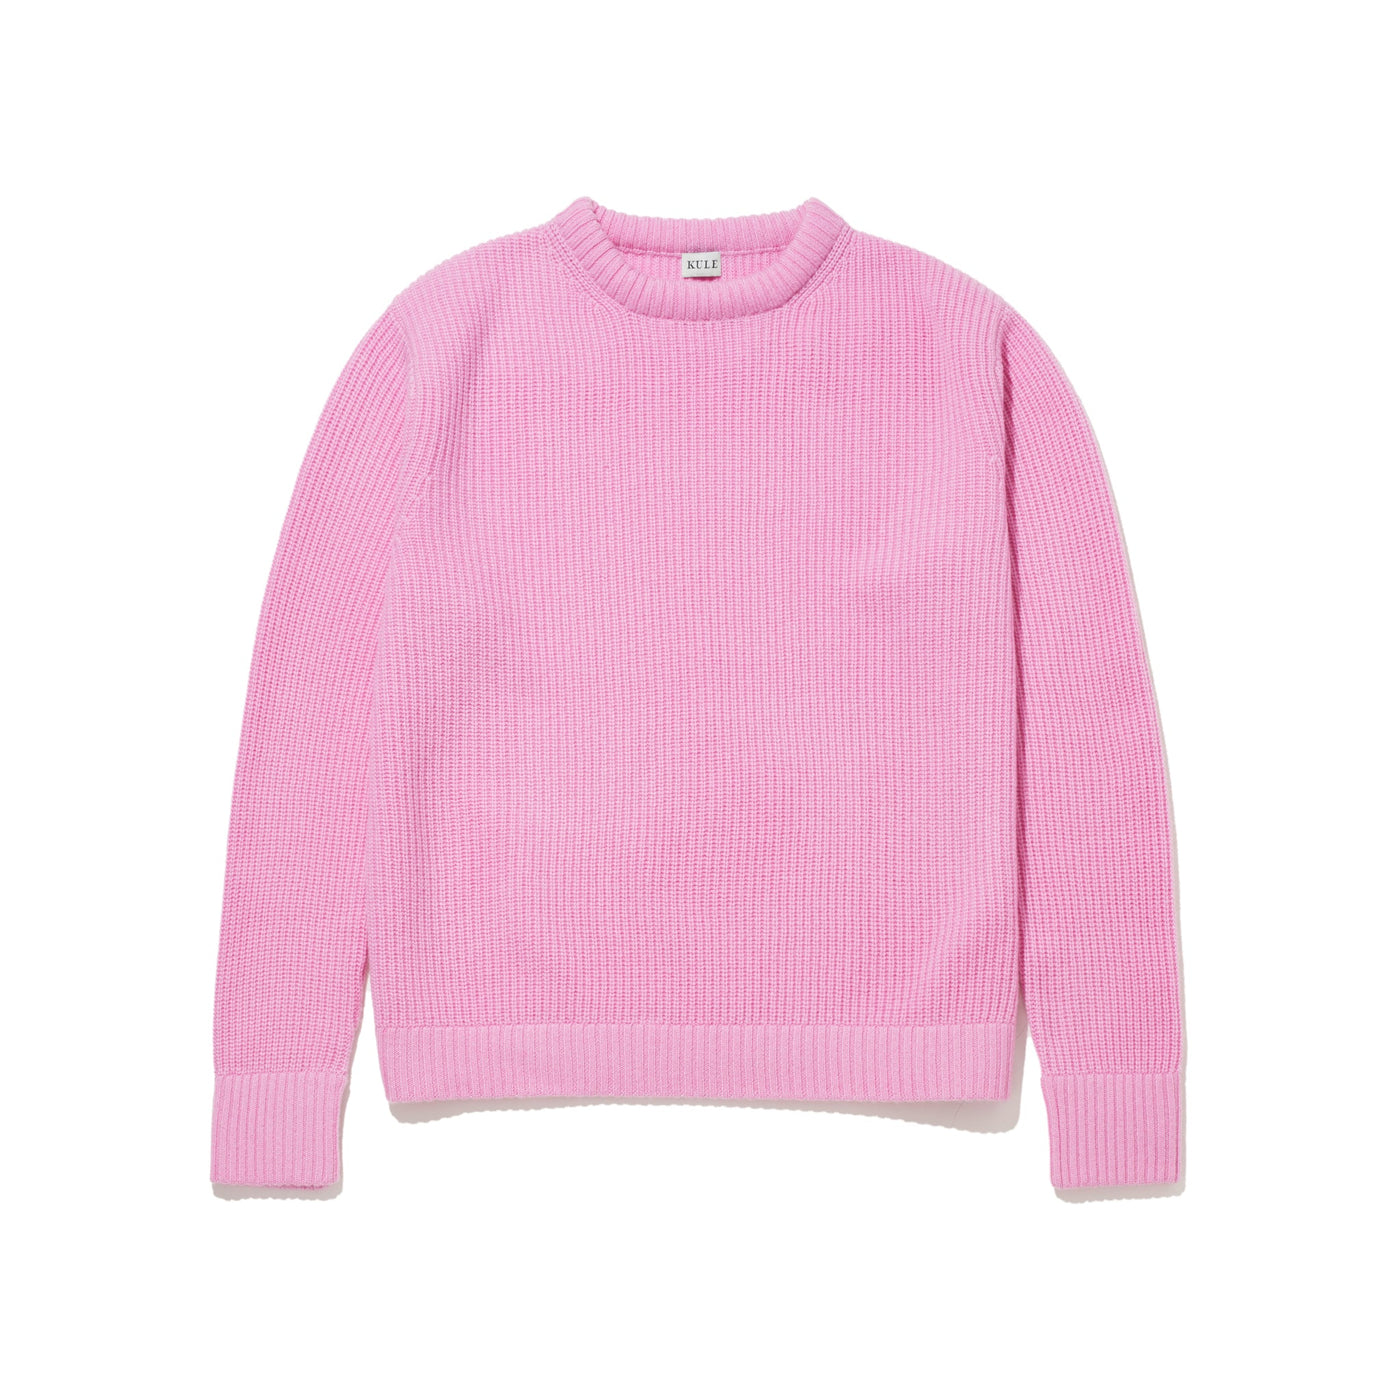 The Alden Sweater